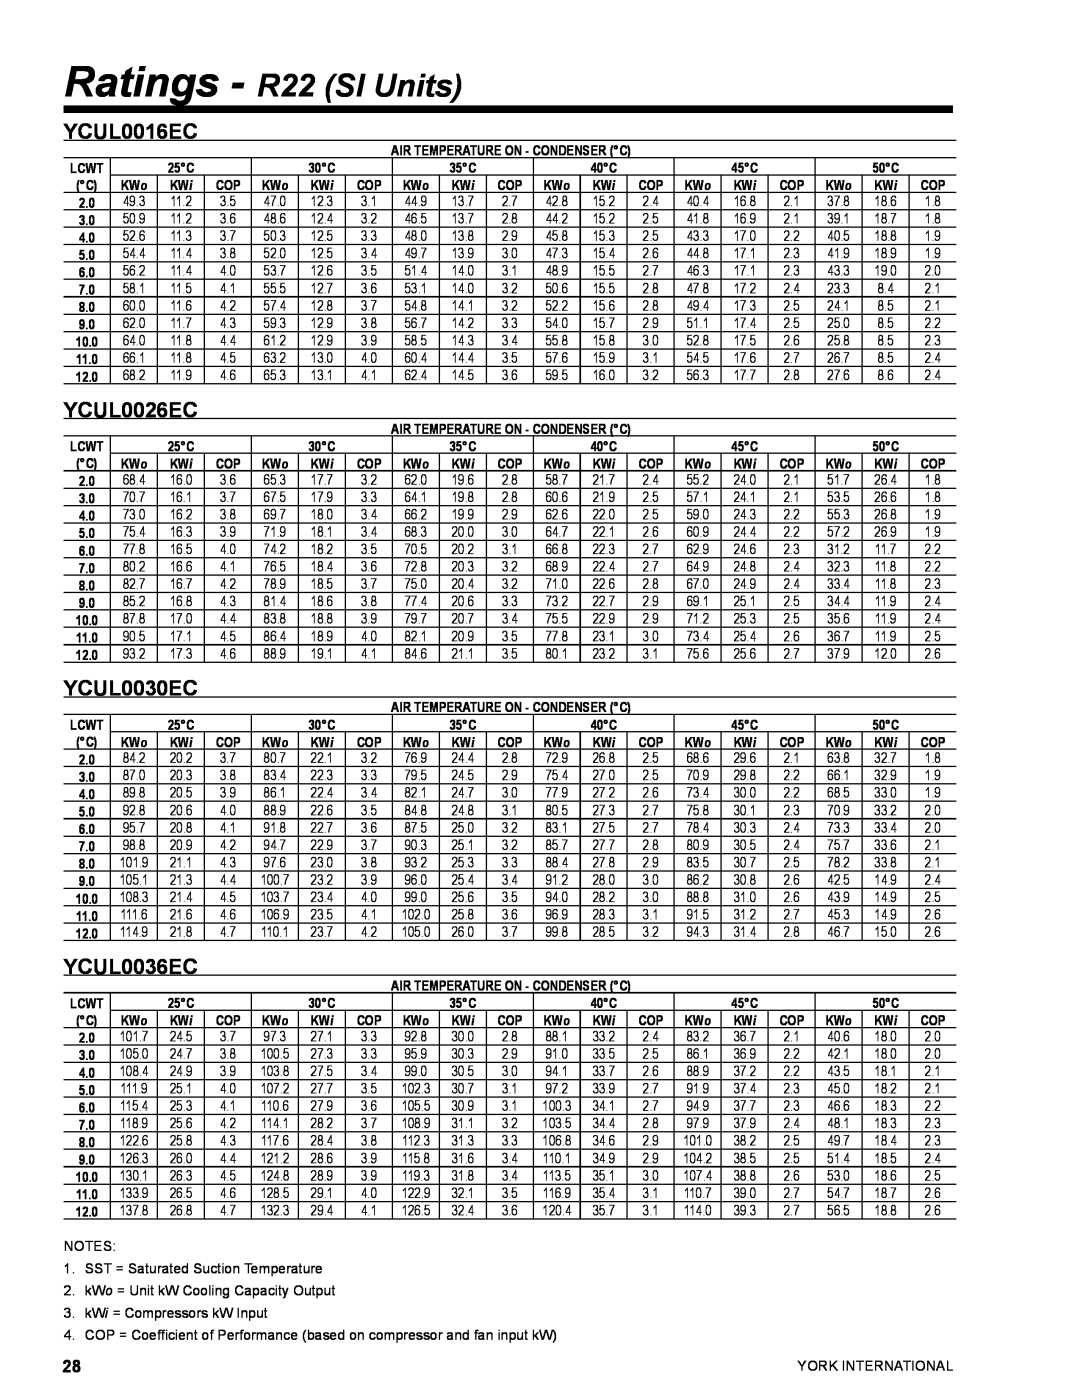 York YCUL0130 manual Ratings - R22 SI Units, YCUL0016EC, YCUL0026EC, YCUL0030EC, YCUL0036EC 